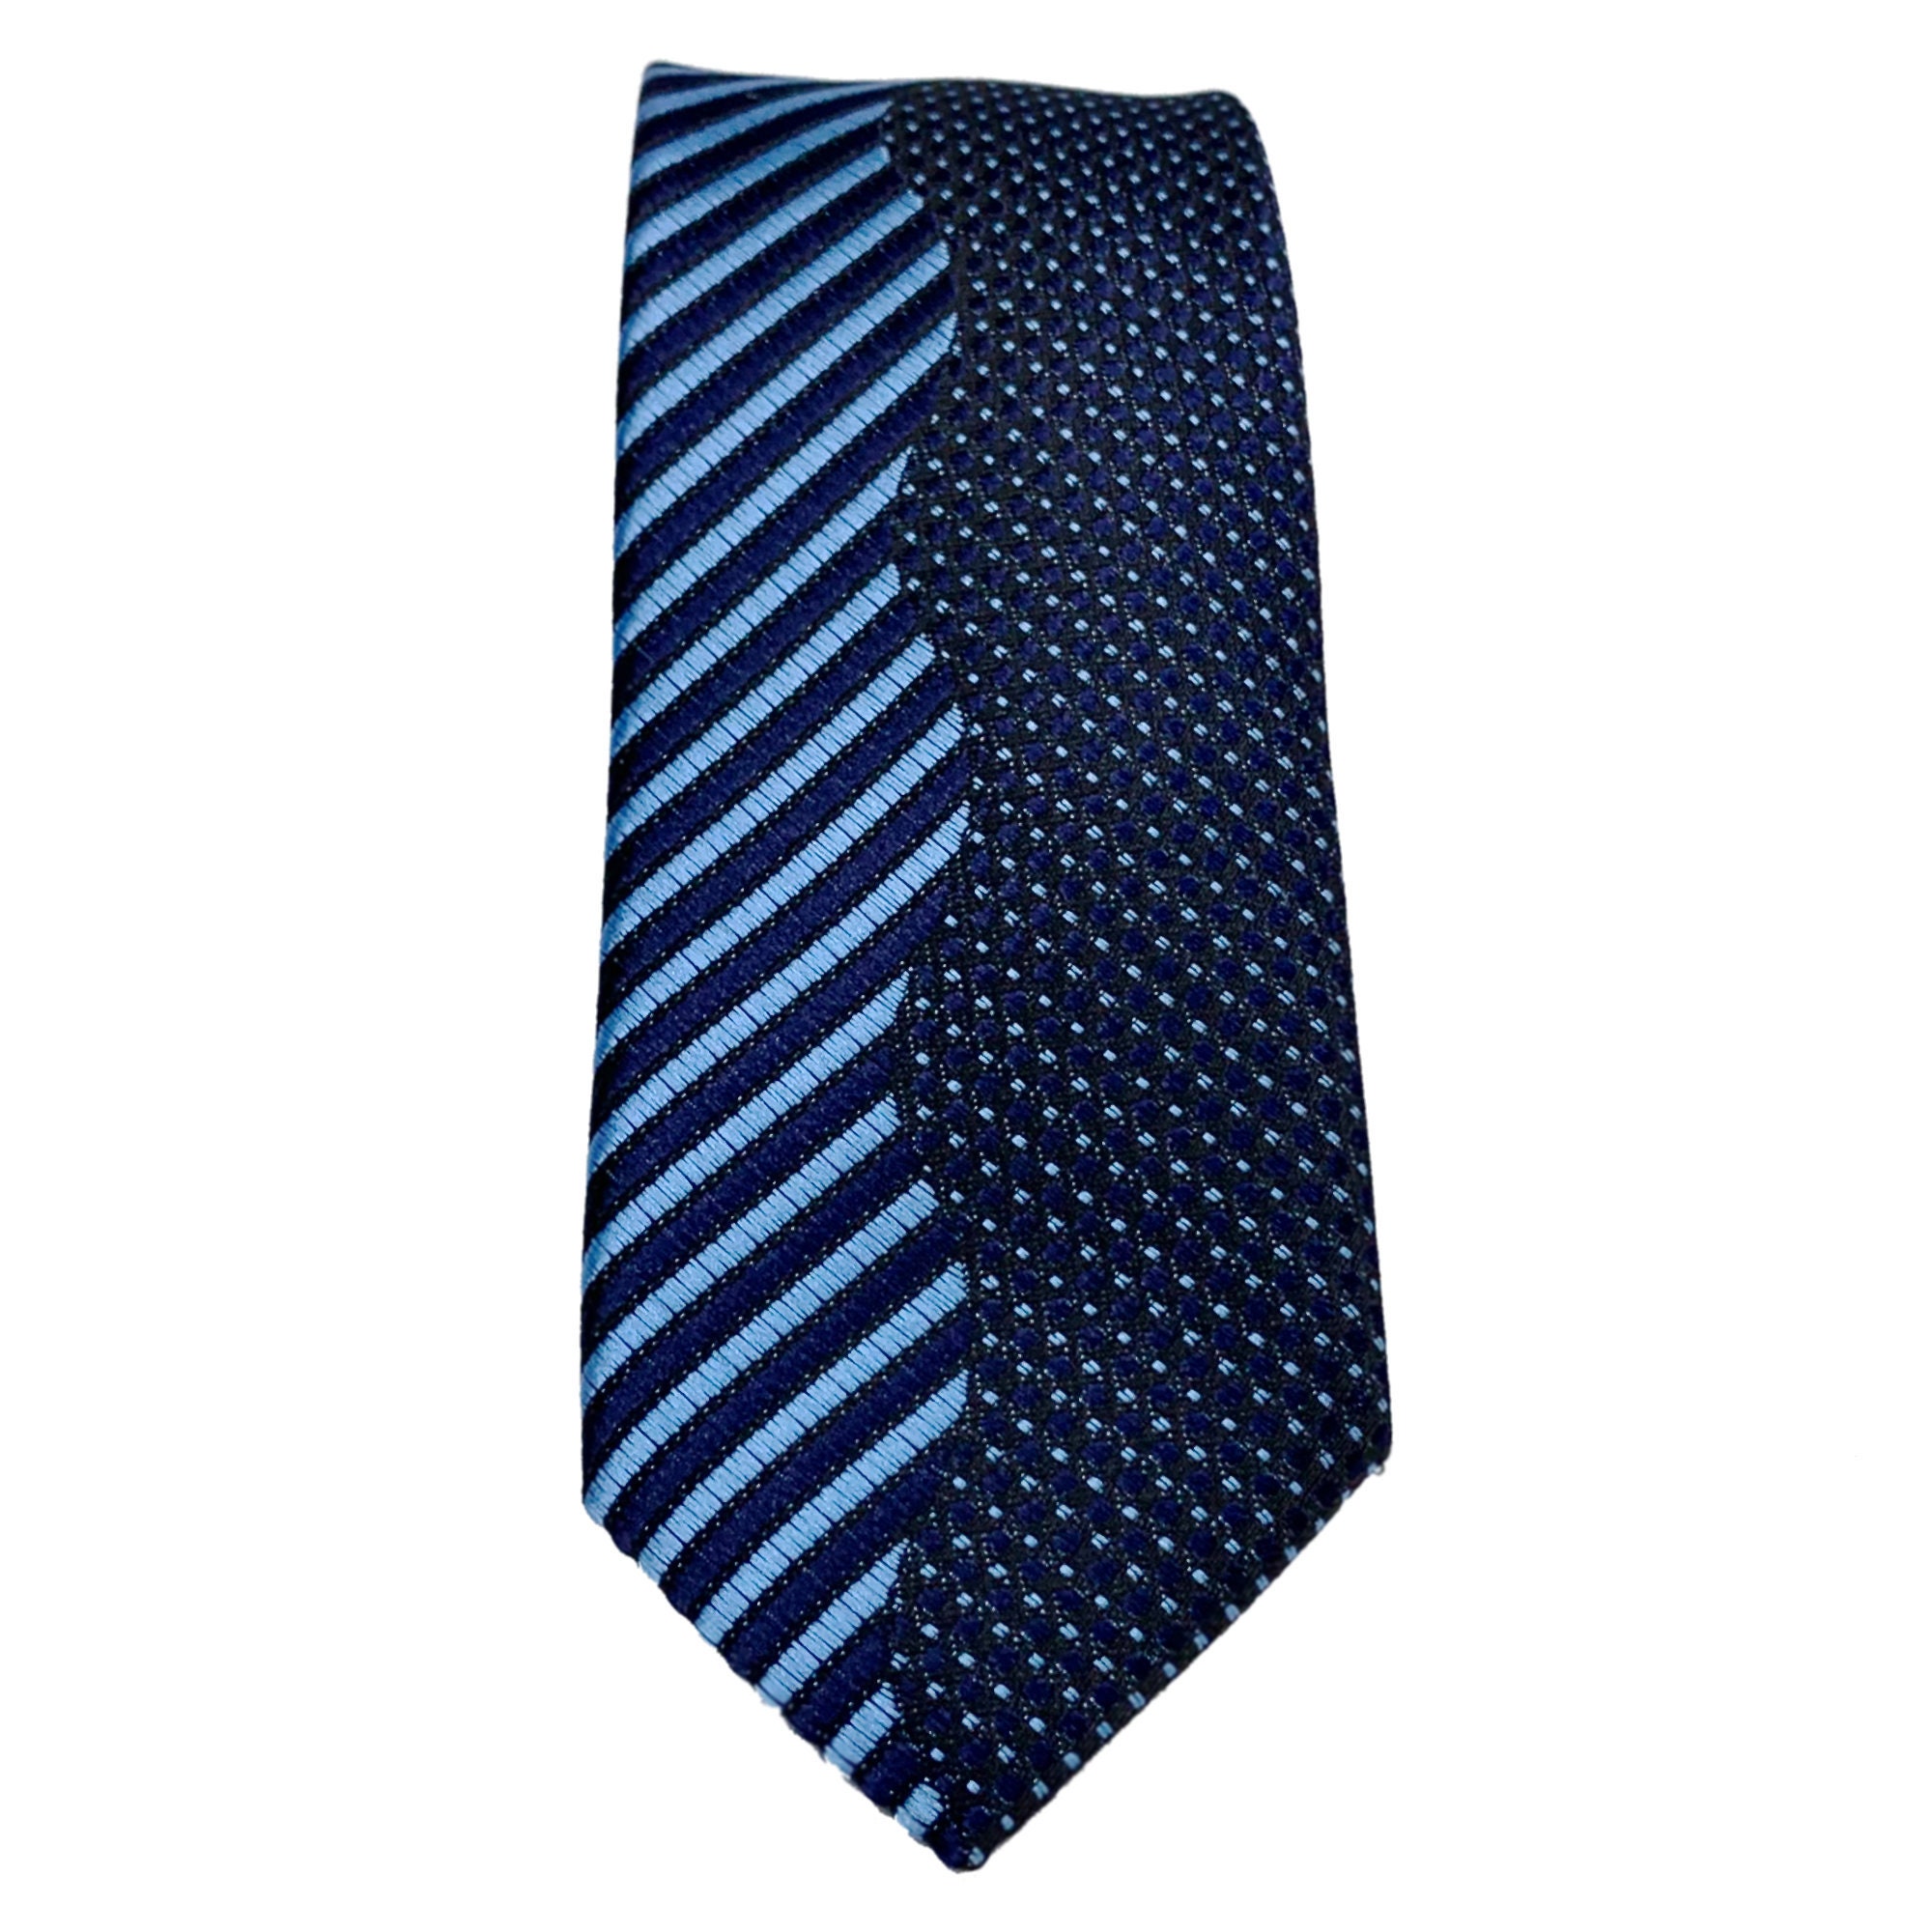 Dark Blue and Light Blue Polka Dot Cross Striped Tie - Etsy